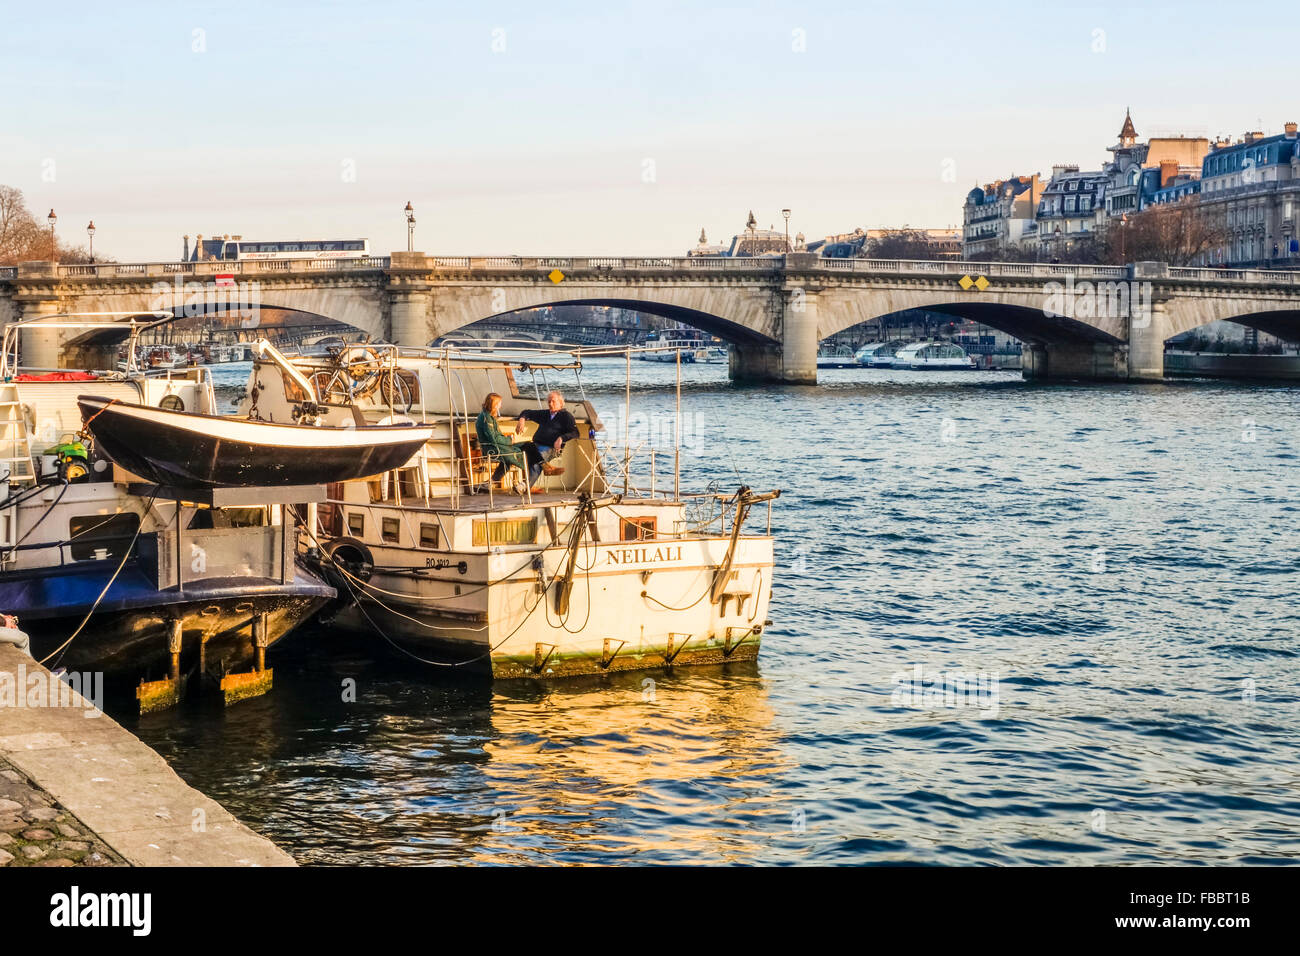 Seine river with barges and couple on terrace on boat, Pont de la Concorde, bridge behind, Paris France. Stock Photo